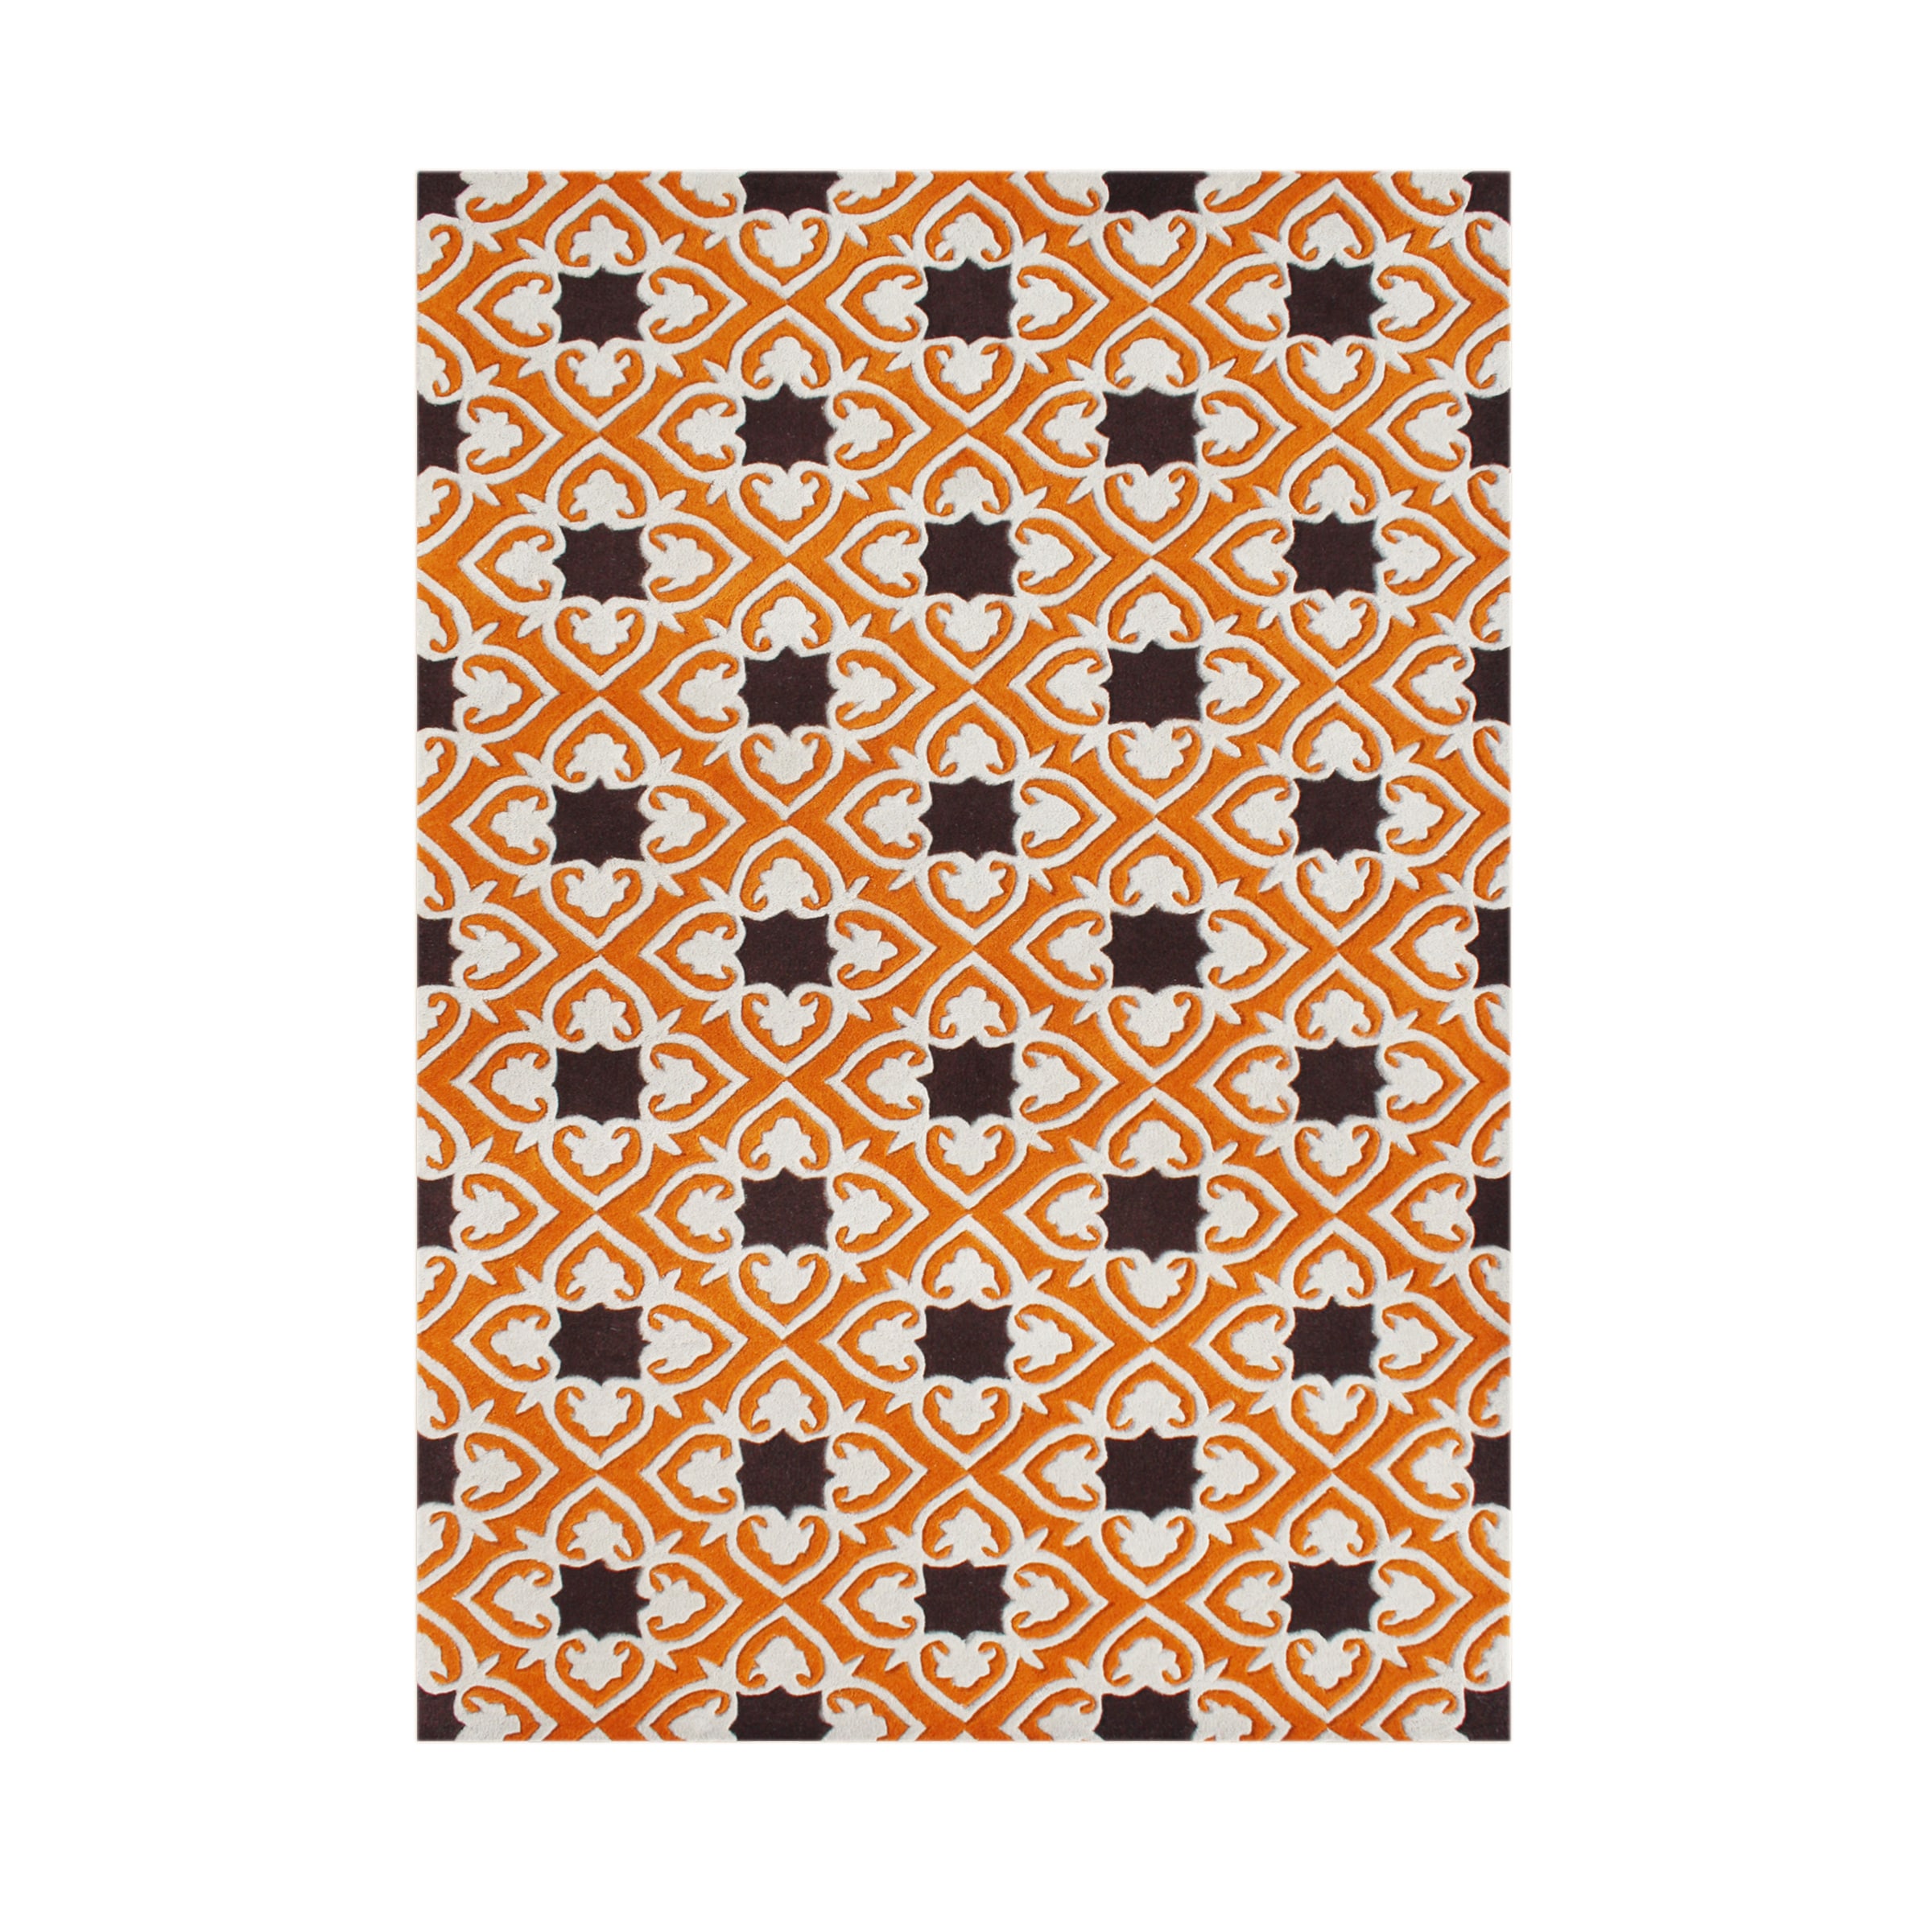 Alliyah Handmade Coral Rose New Zealand Blend Wool Rug (5' x 8') - 5' x 8'